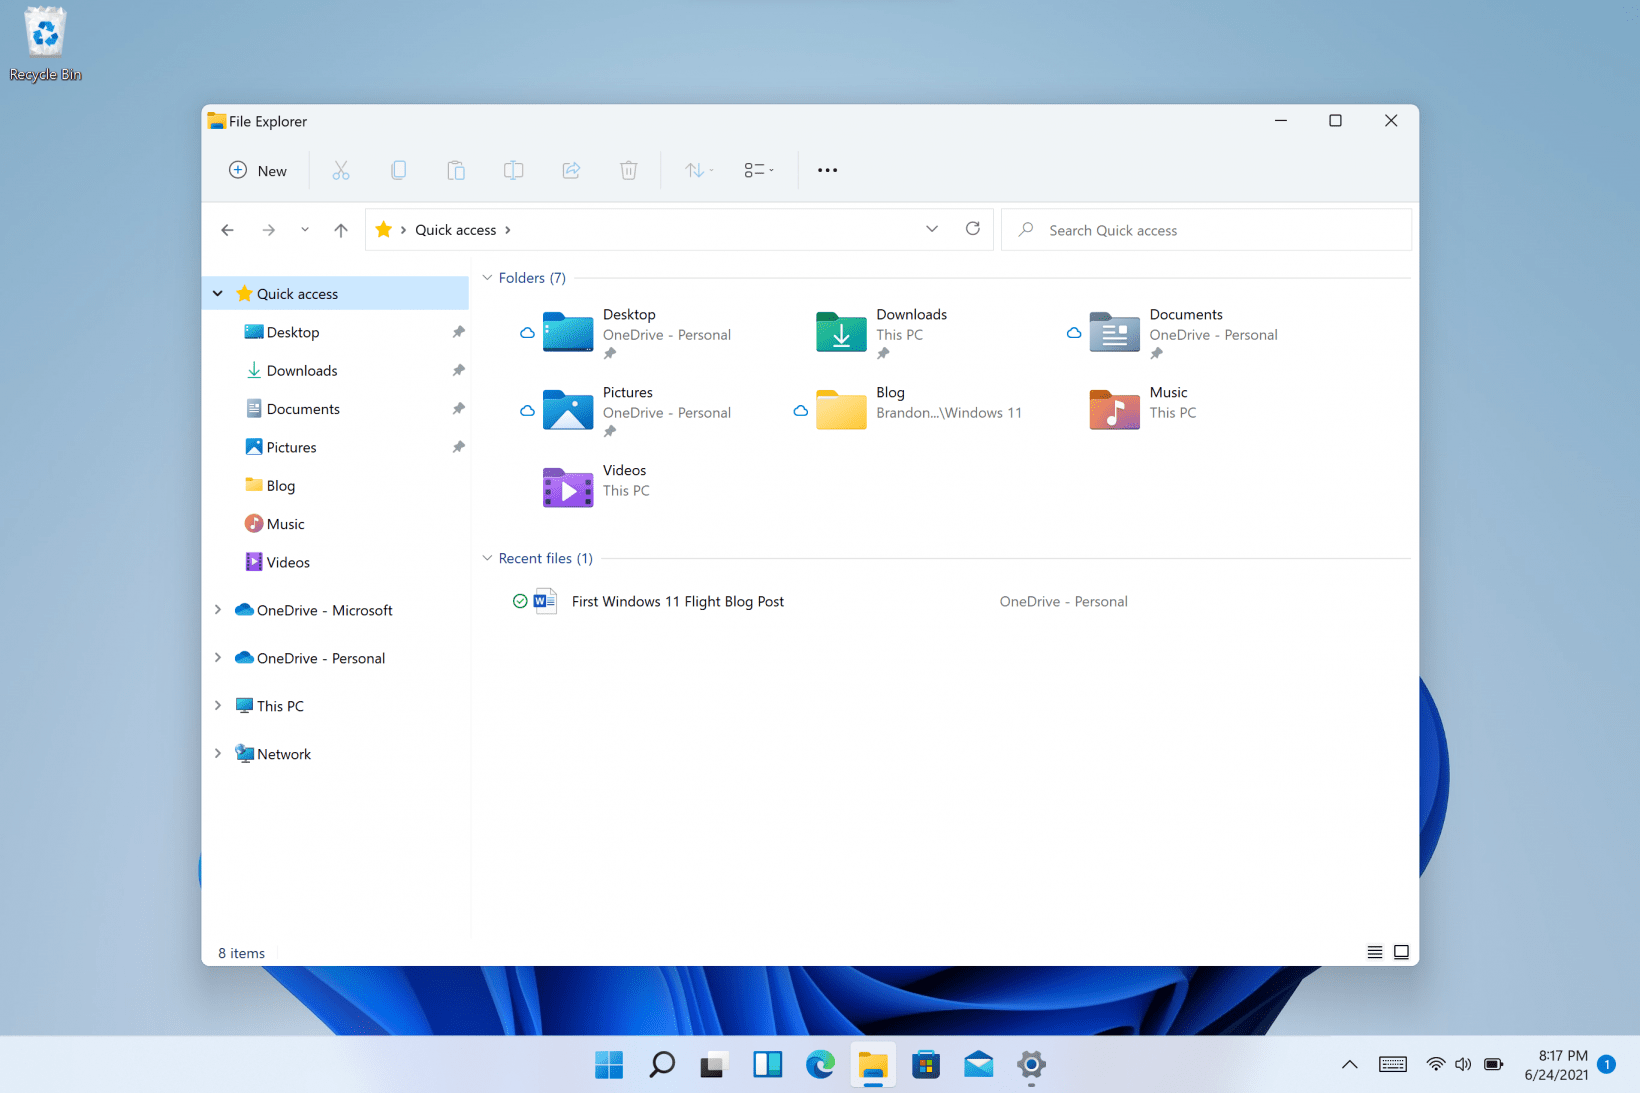 Windows 11's new File Explorer